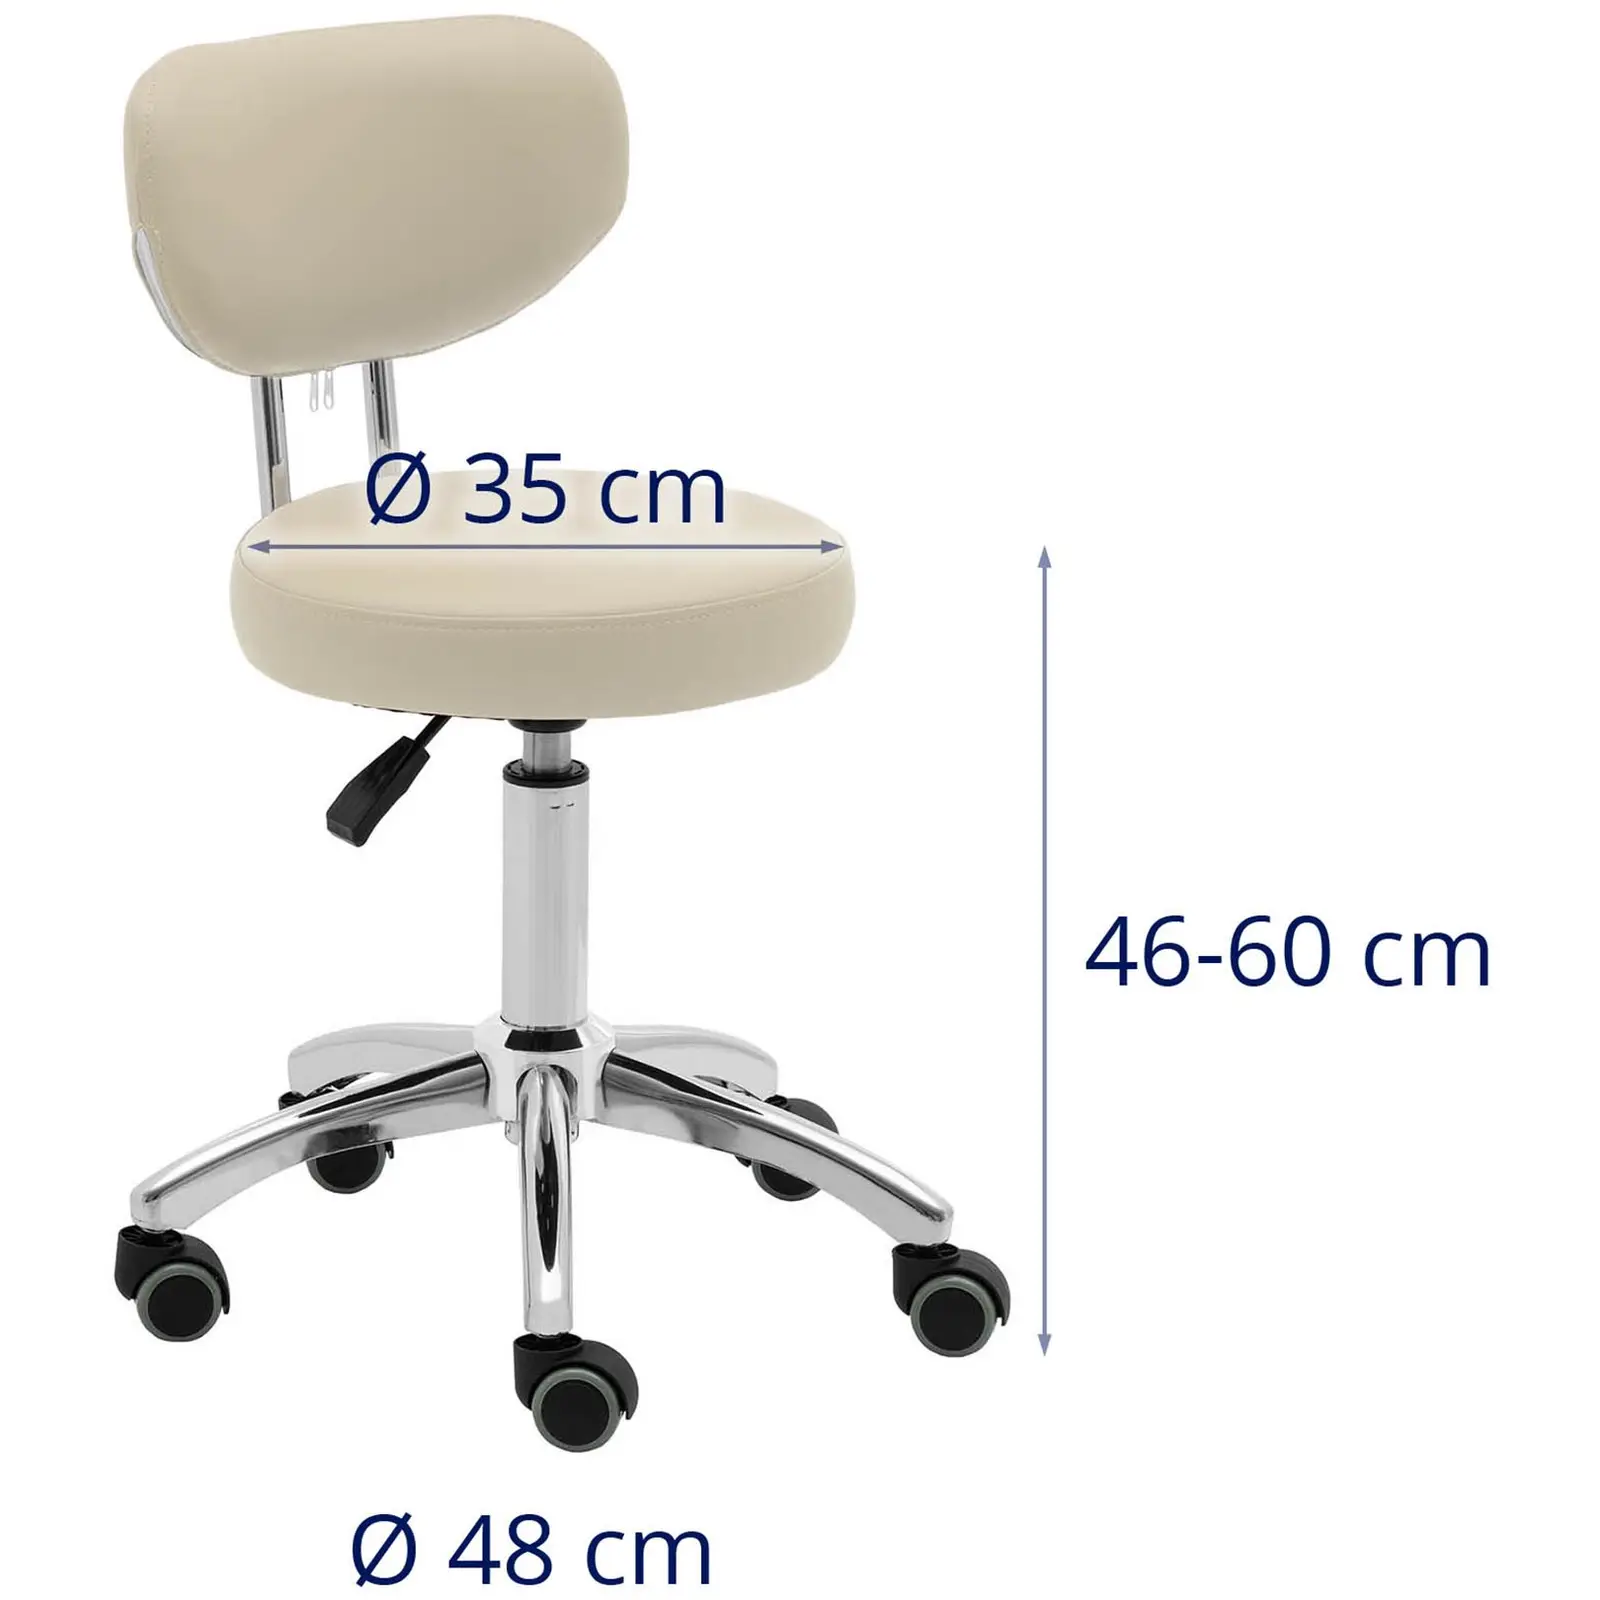 Arbetsstol med ryggstöd - 46 - 60 cm - 150 kg - Mörkbeige